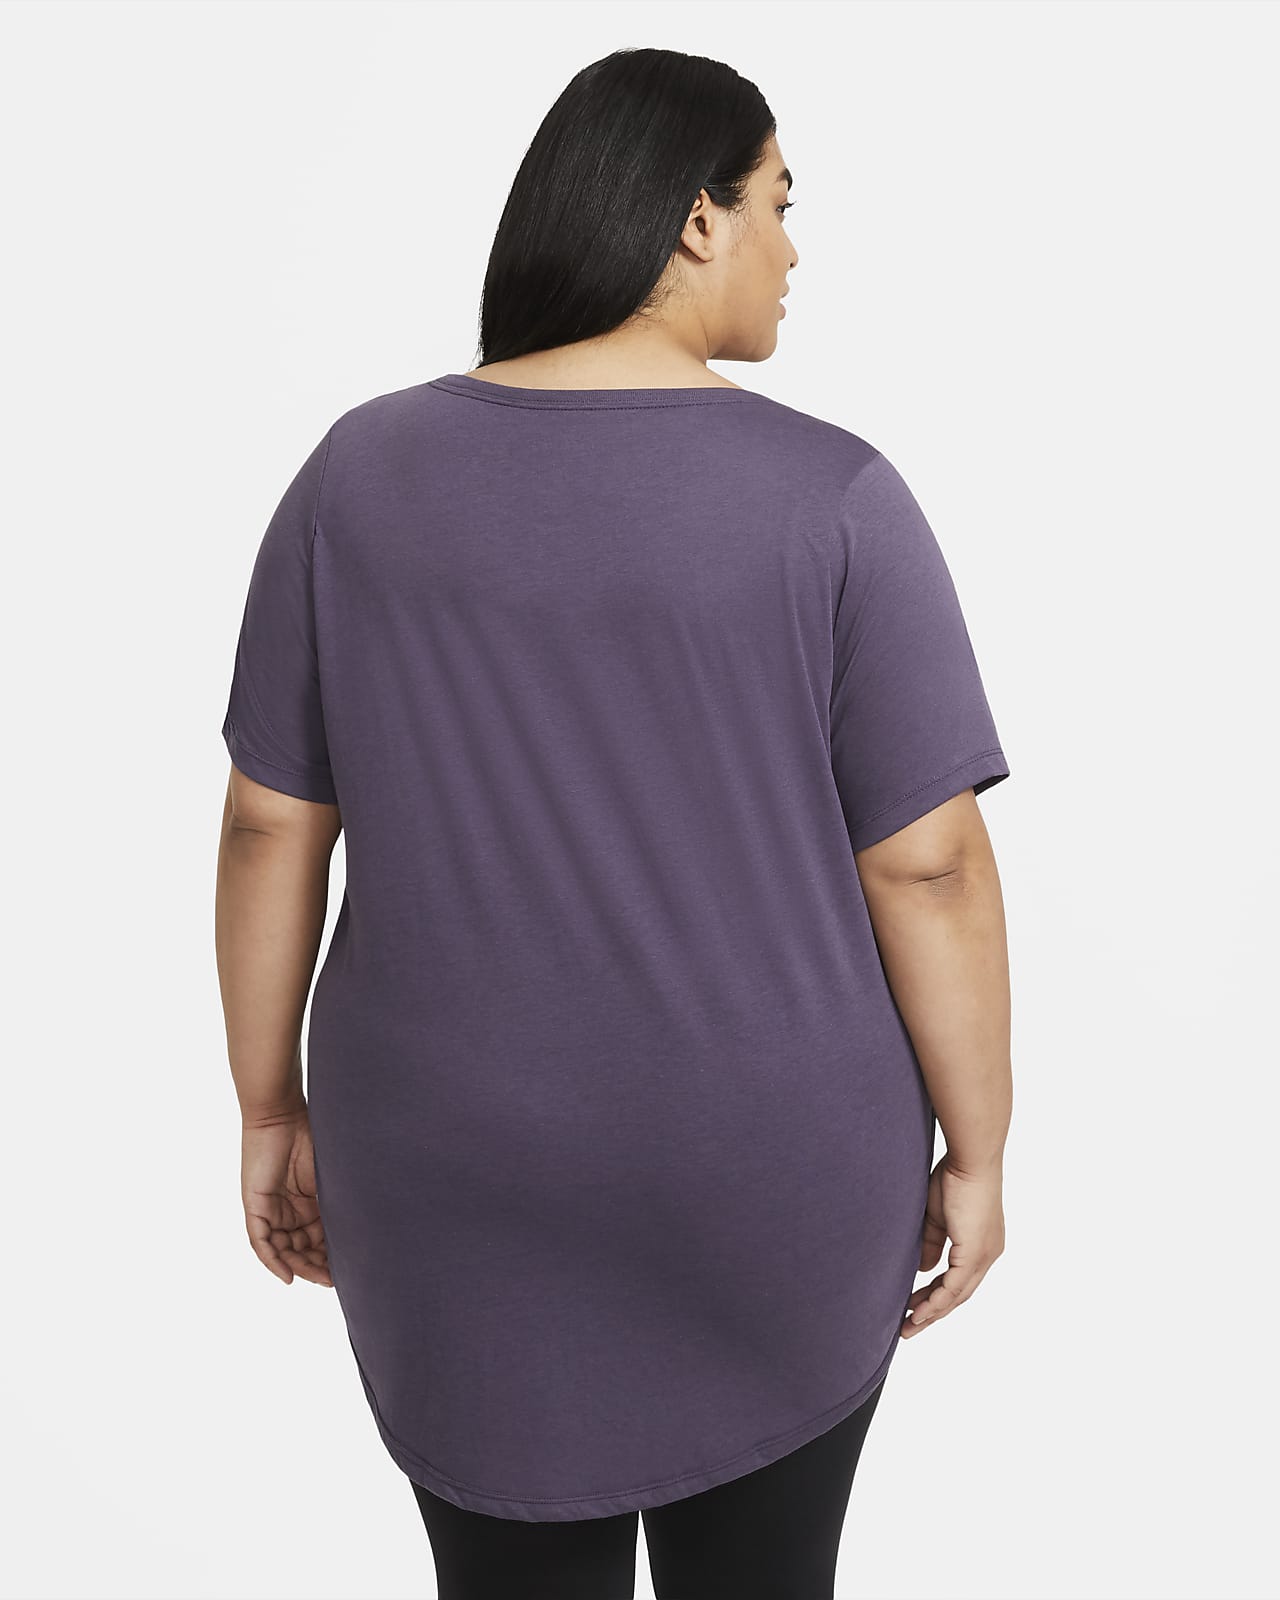 Nike Sportswear Essential Women's Tunic (Plus Size). Nike.com